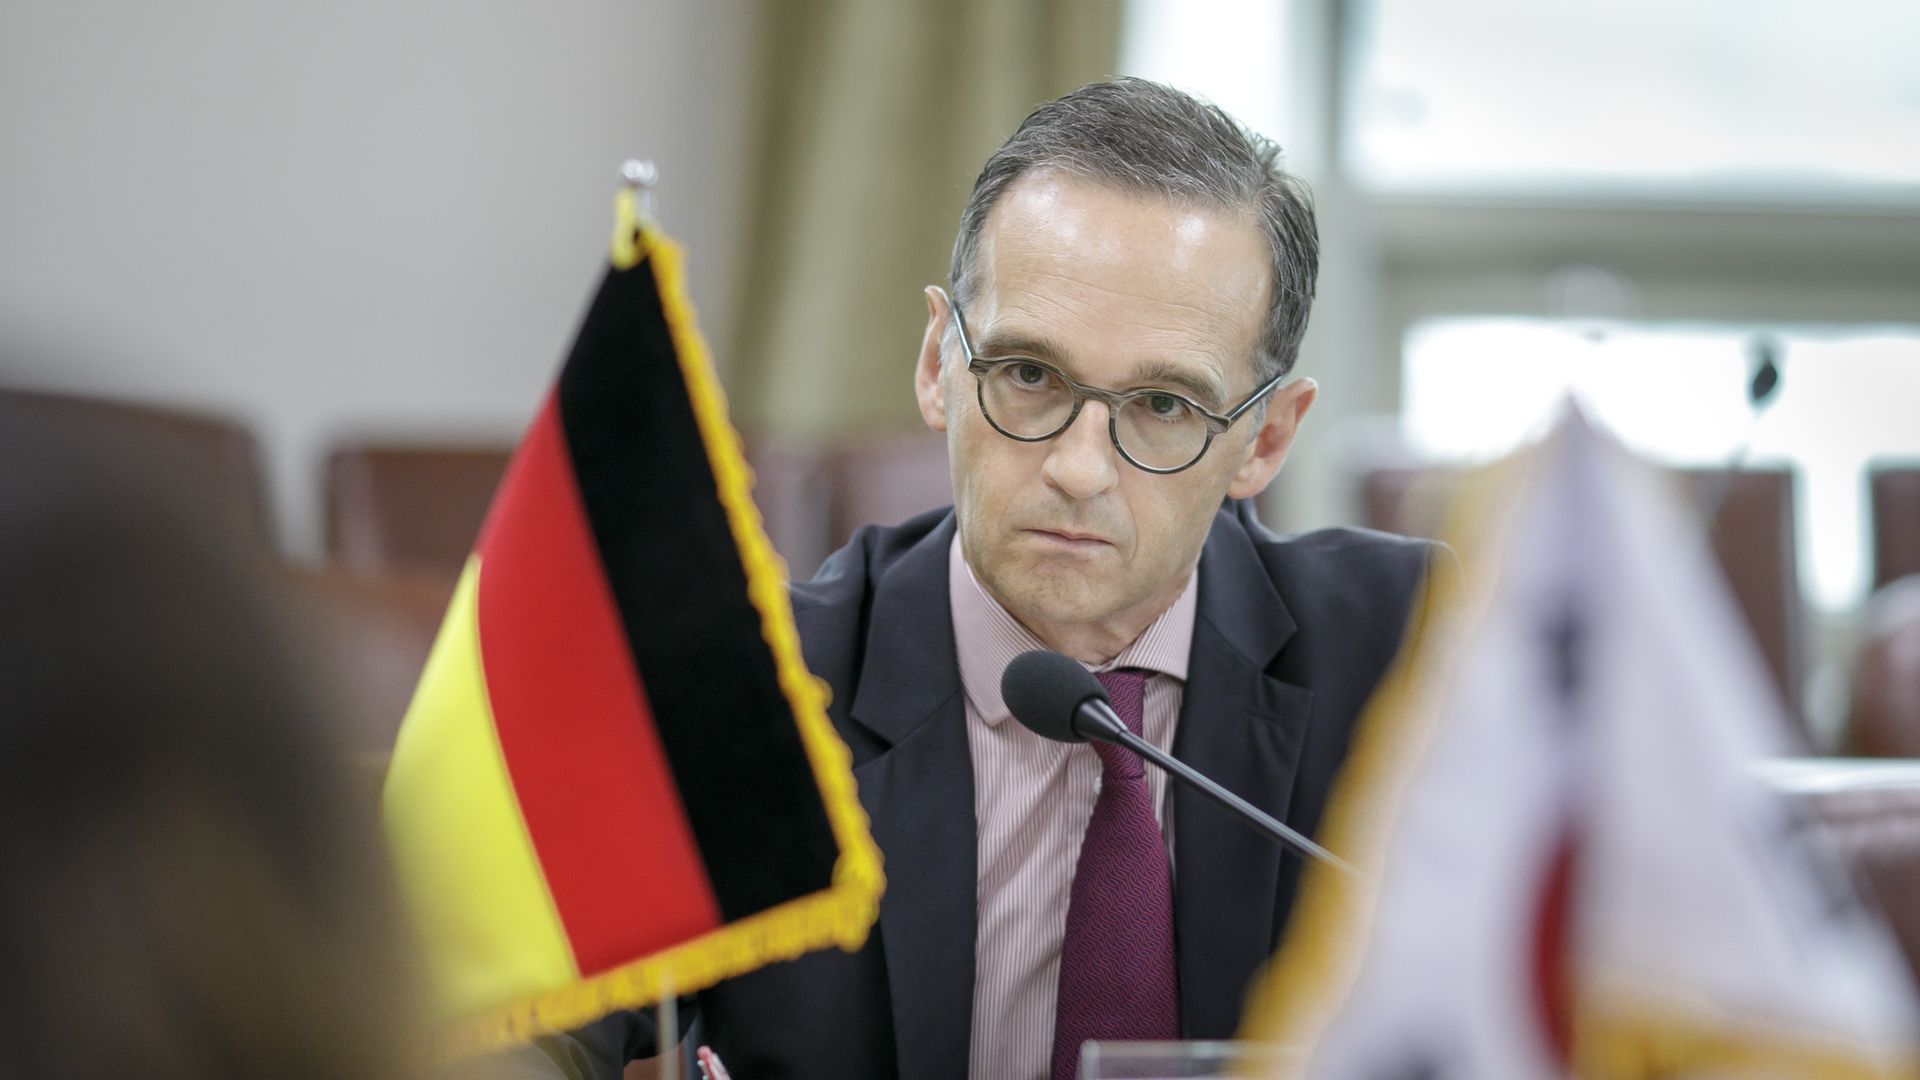 German foreign minister Heiko Maas